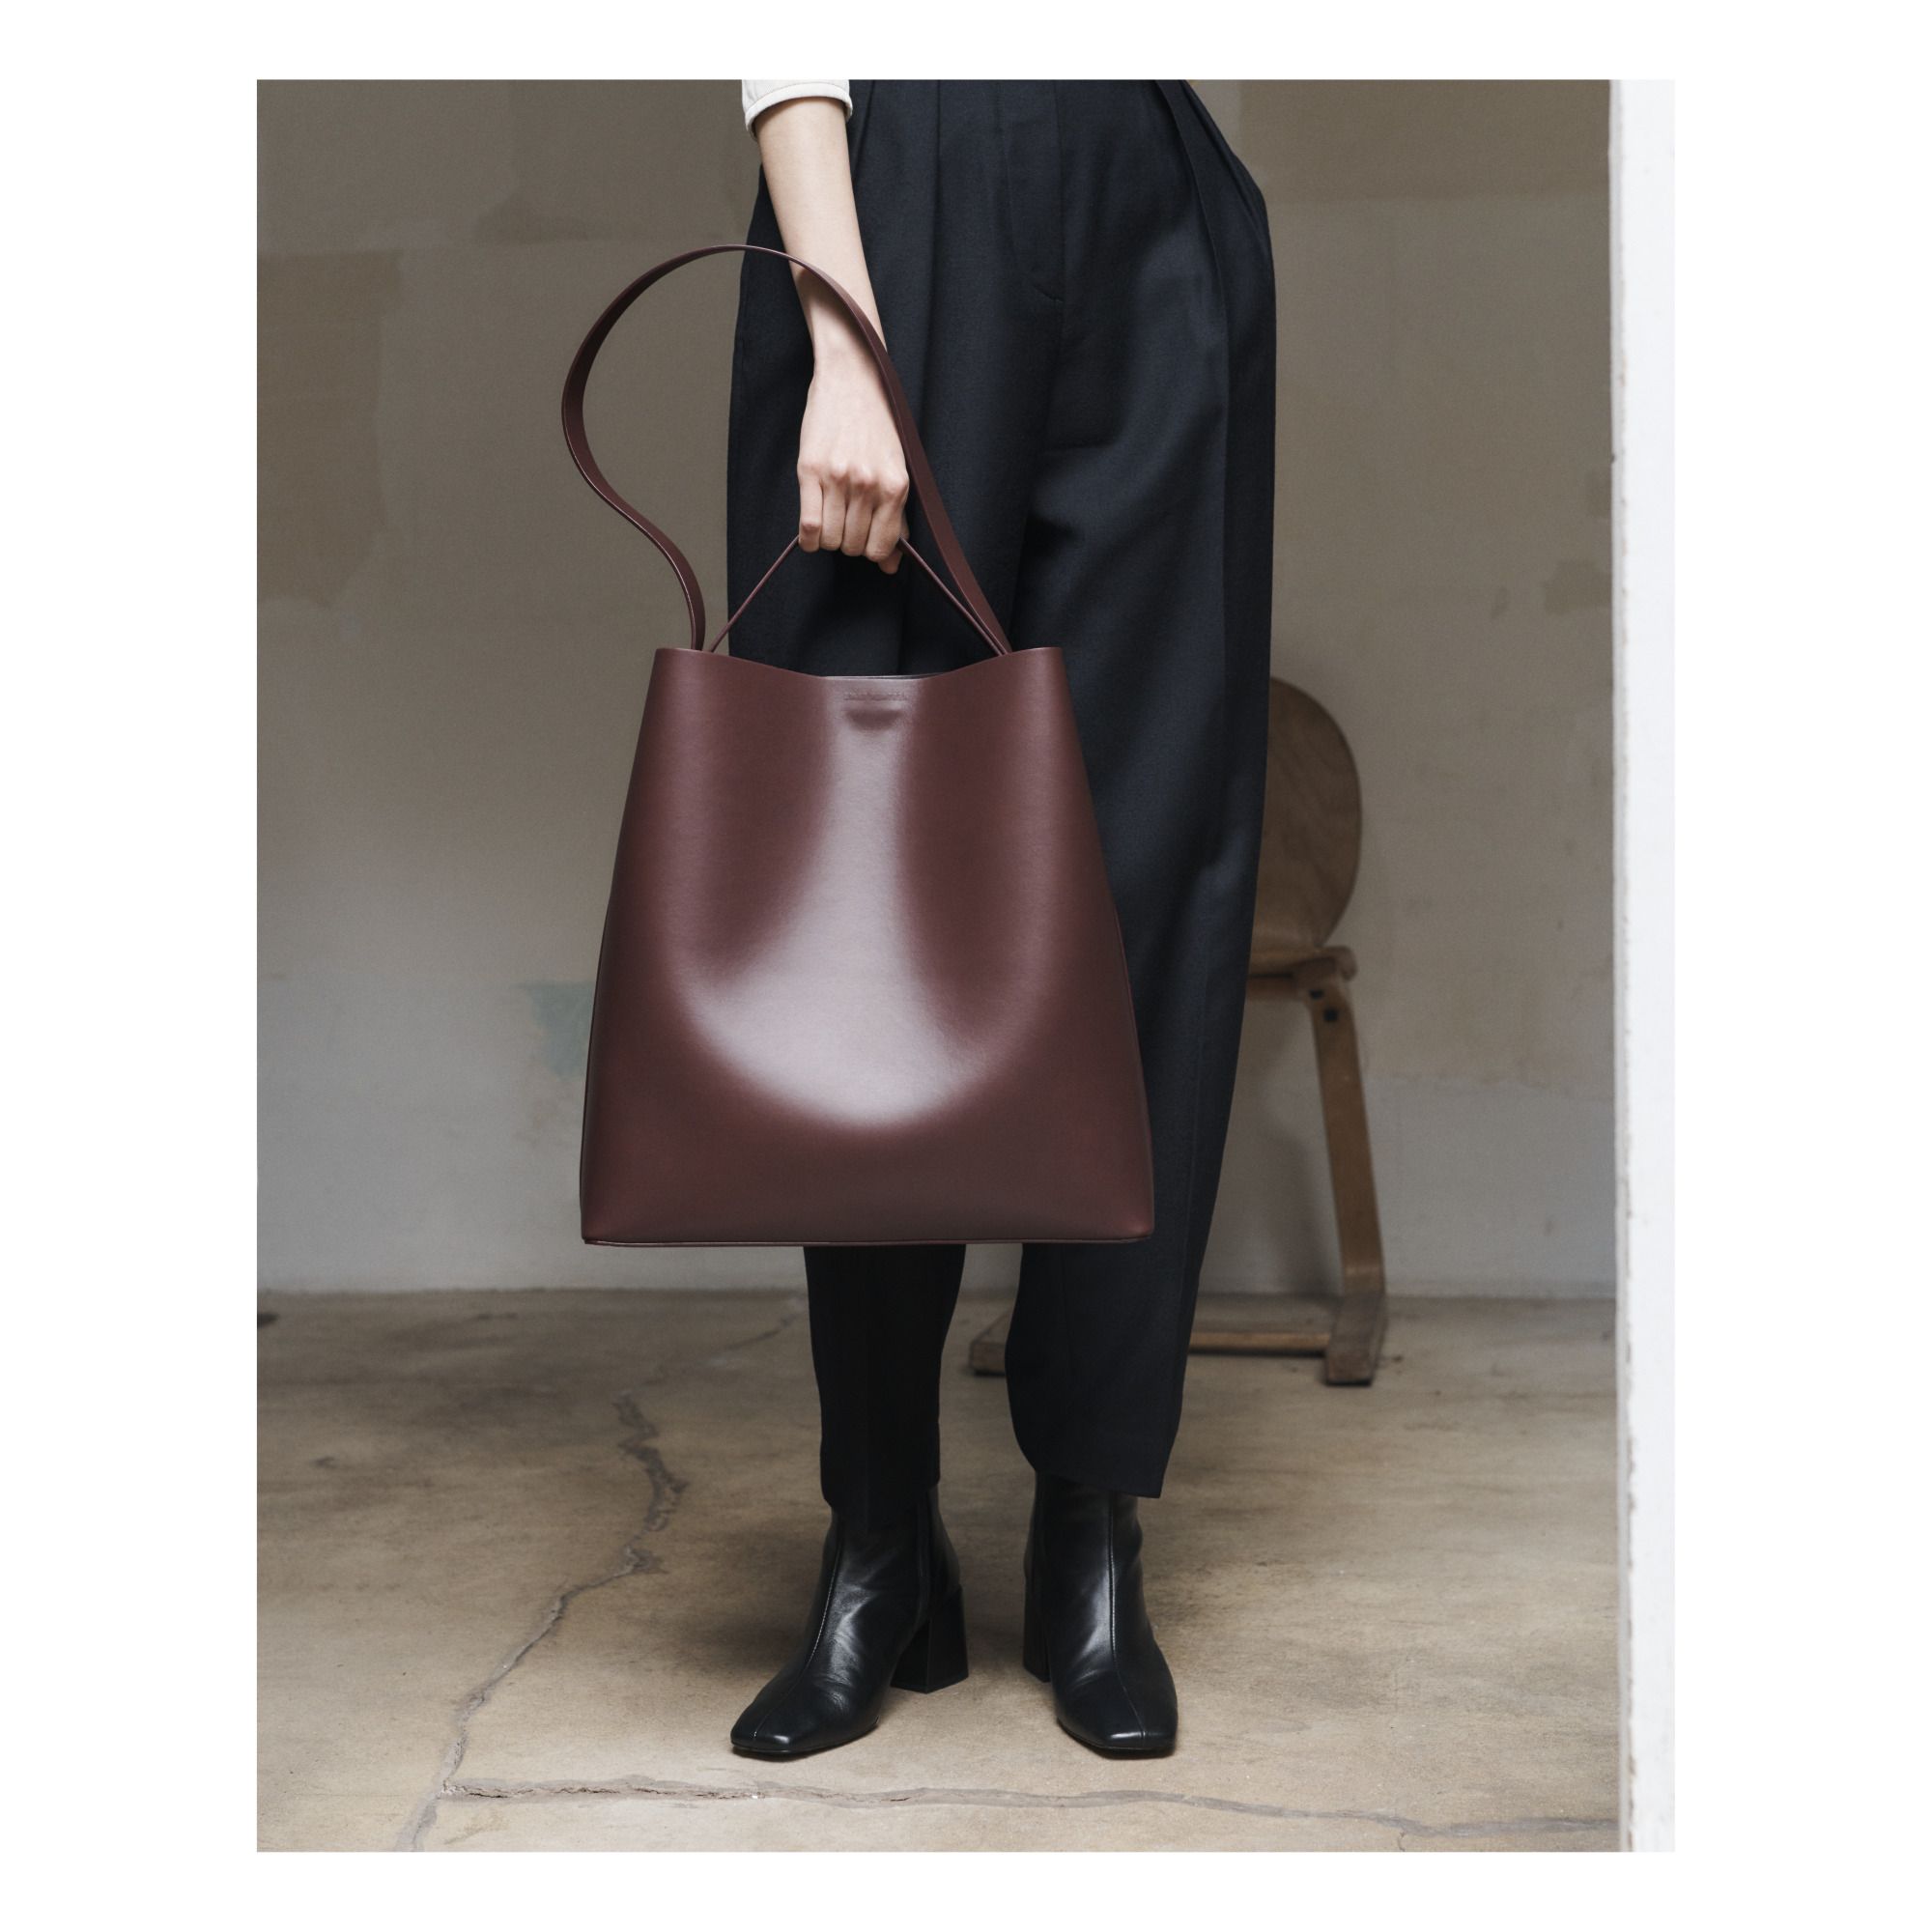 Black Sac smooth-leather tote bag, Aesther Ekme